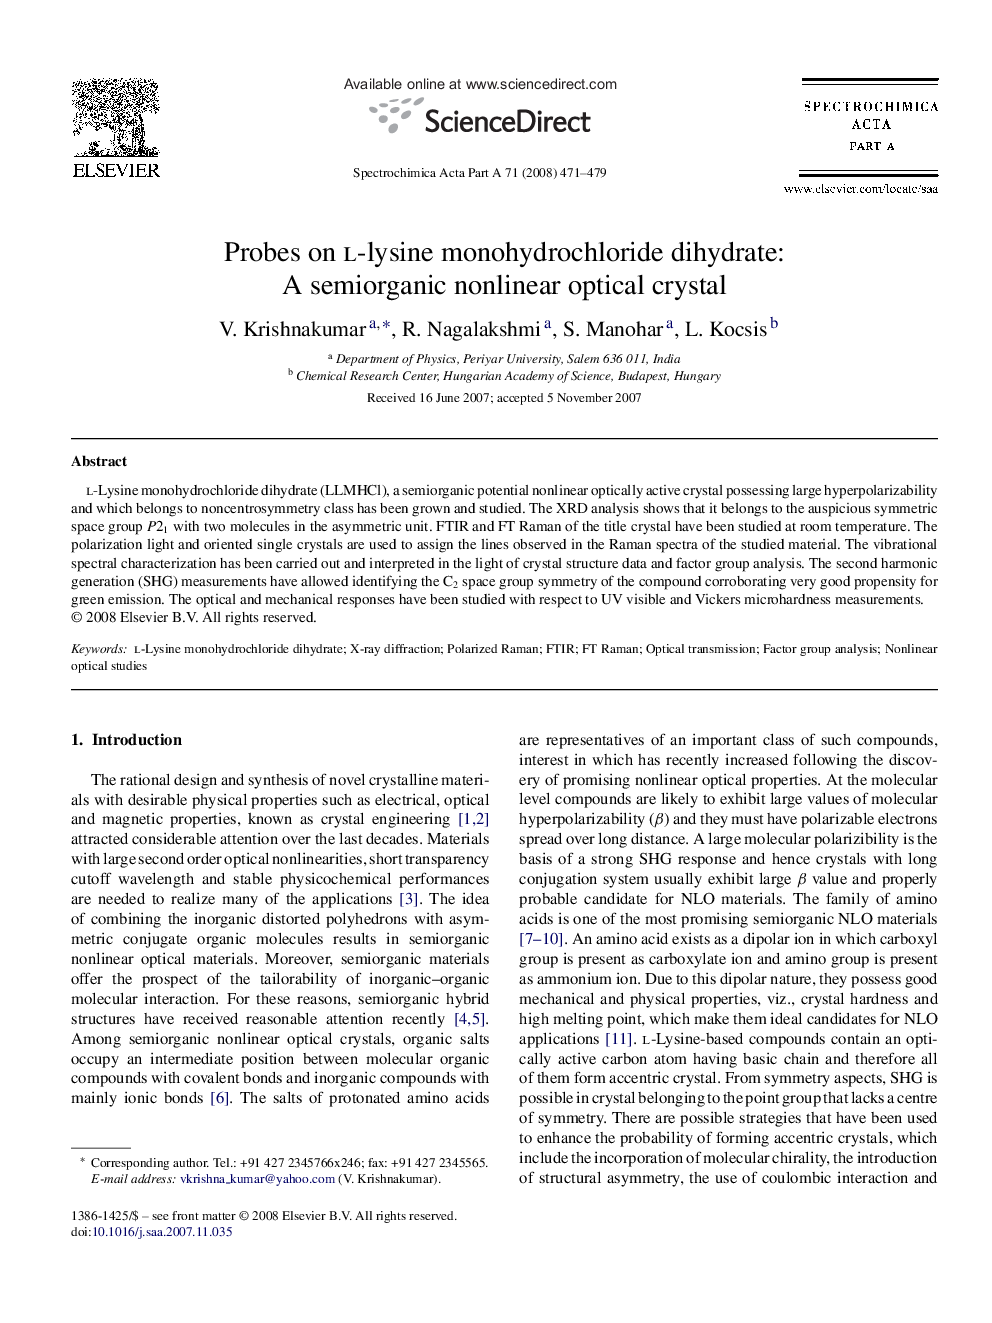 Probes on l-lysine monohydrochloride dihydrate: A semiorganic nonlinear optical crystal